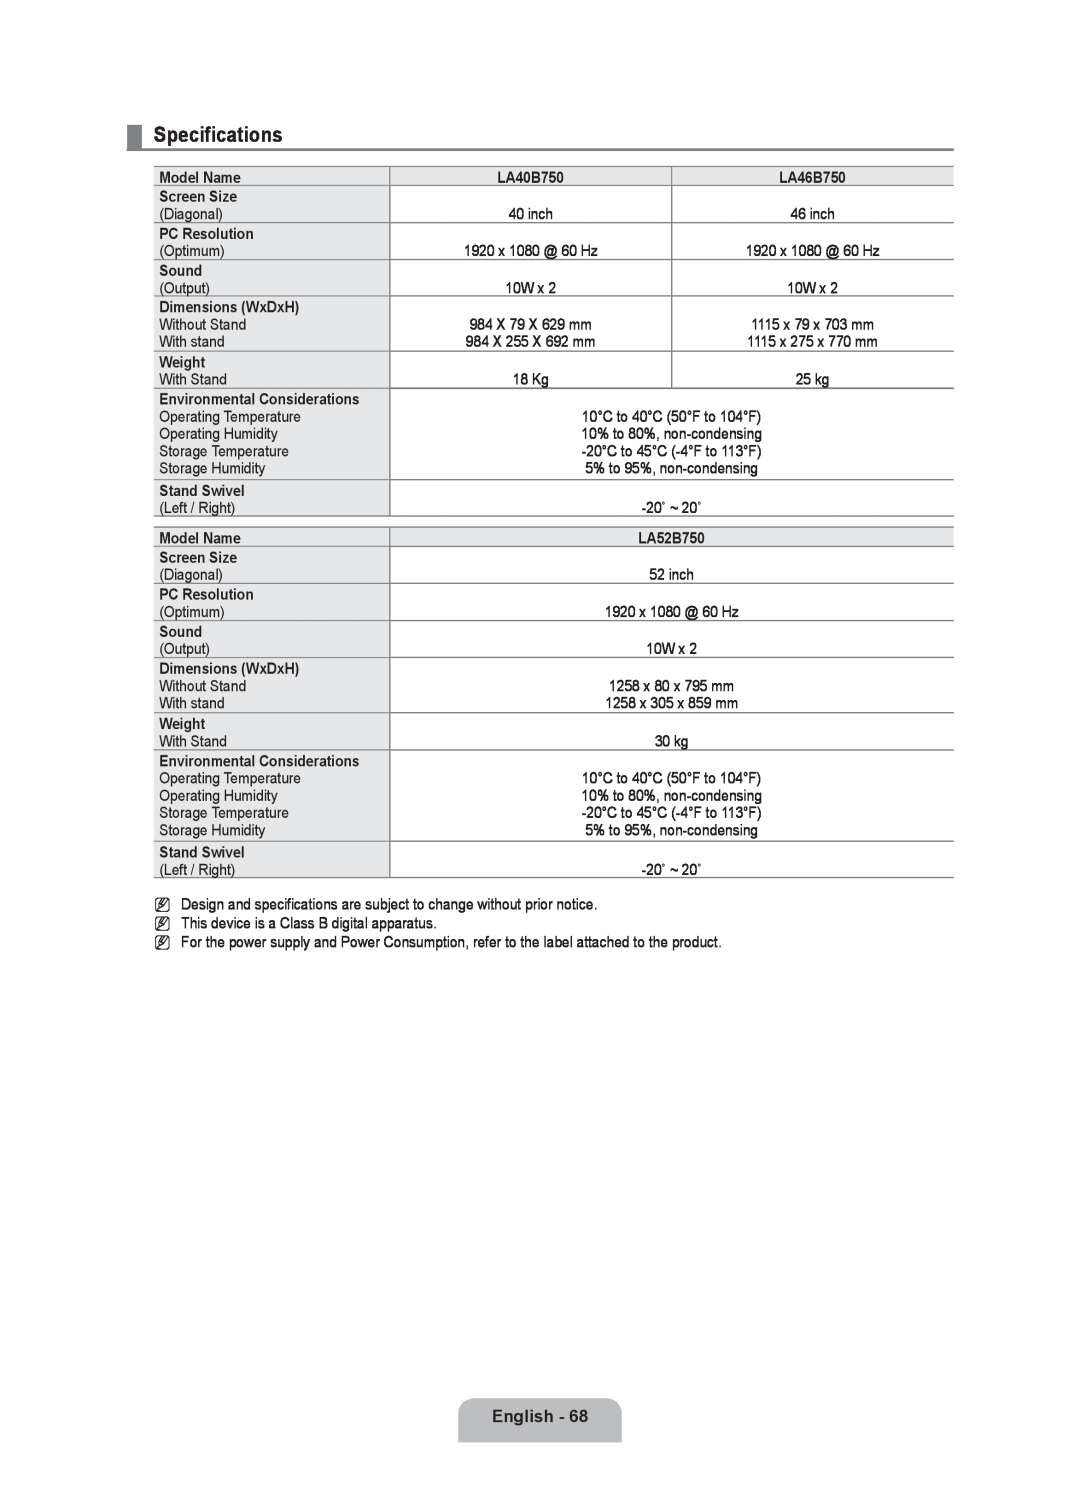 Samsung LA46B750U1R Specifications, Model Name, LA40B750, Screen Size, PC Resolution, Sound, Dimensions WxDxH, Weight 